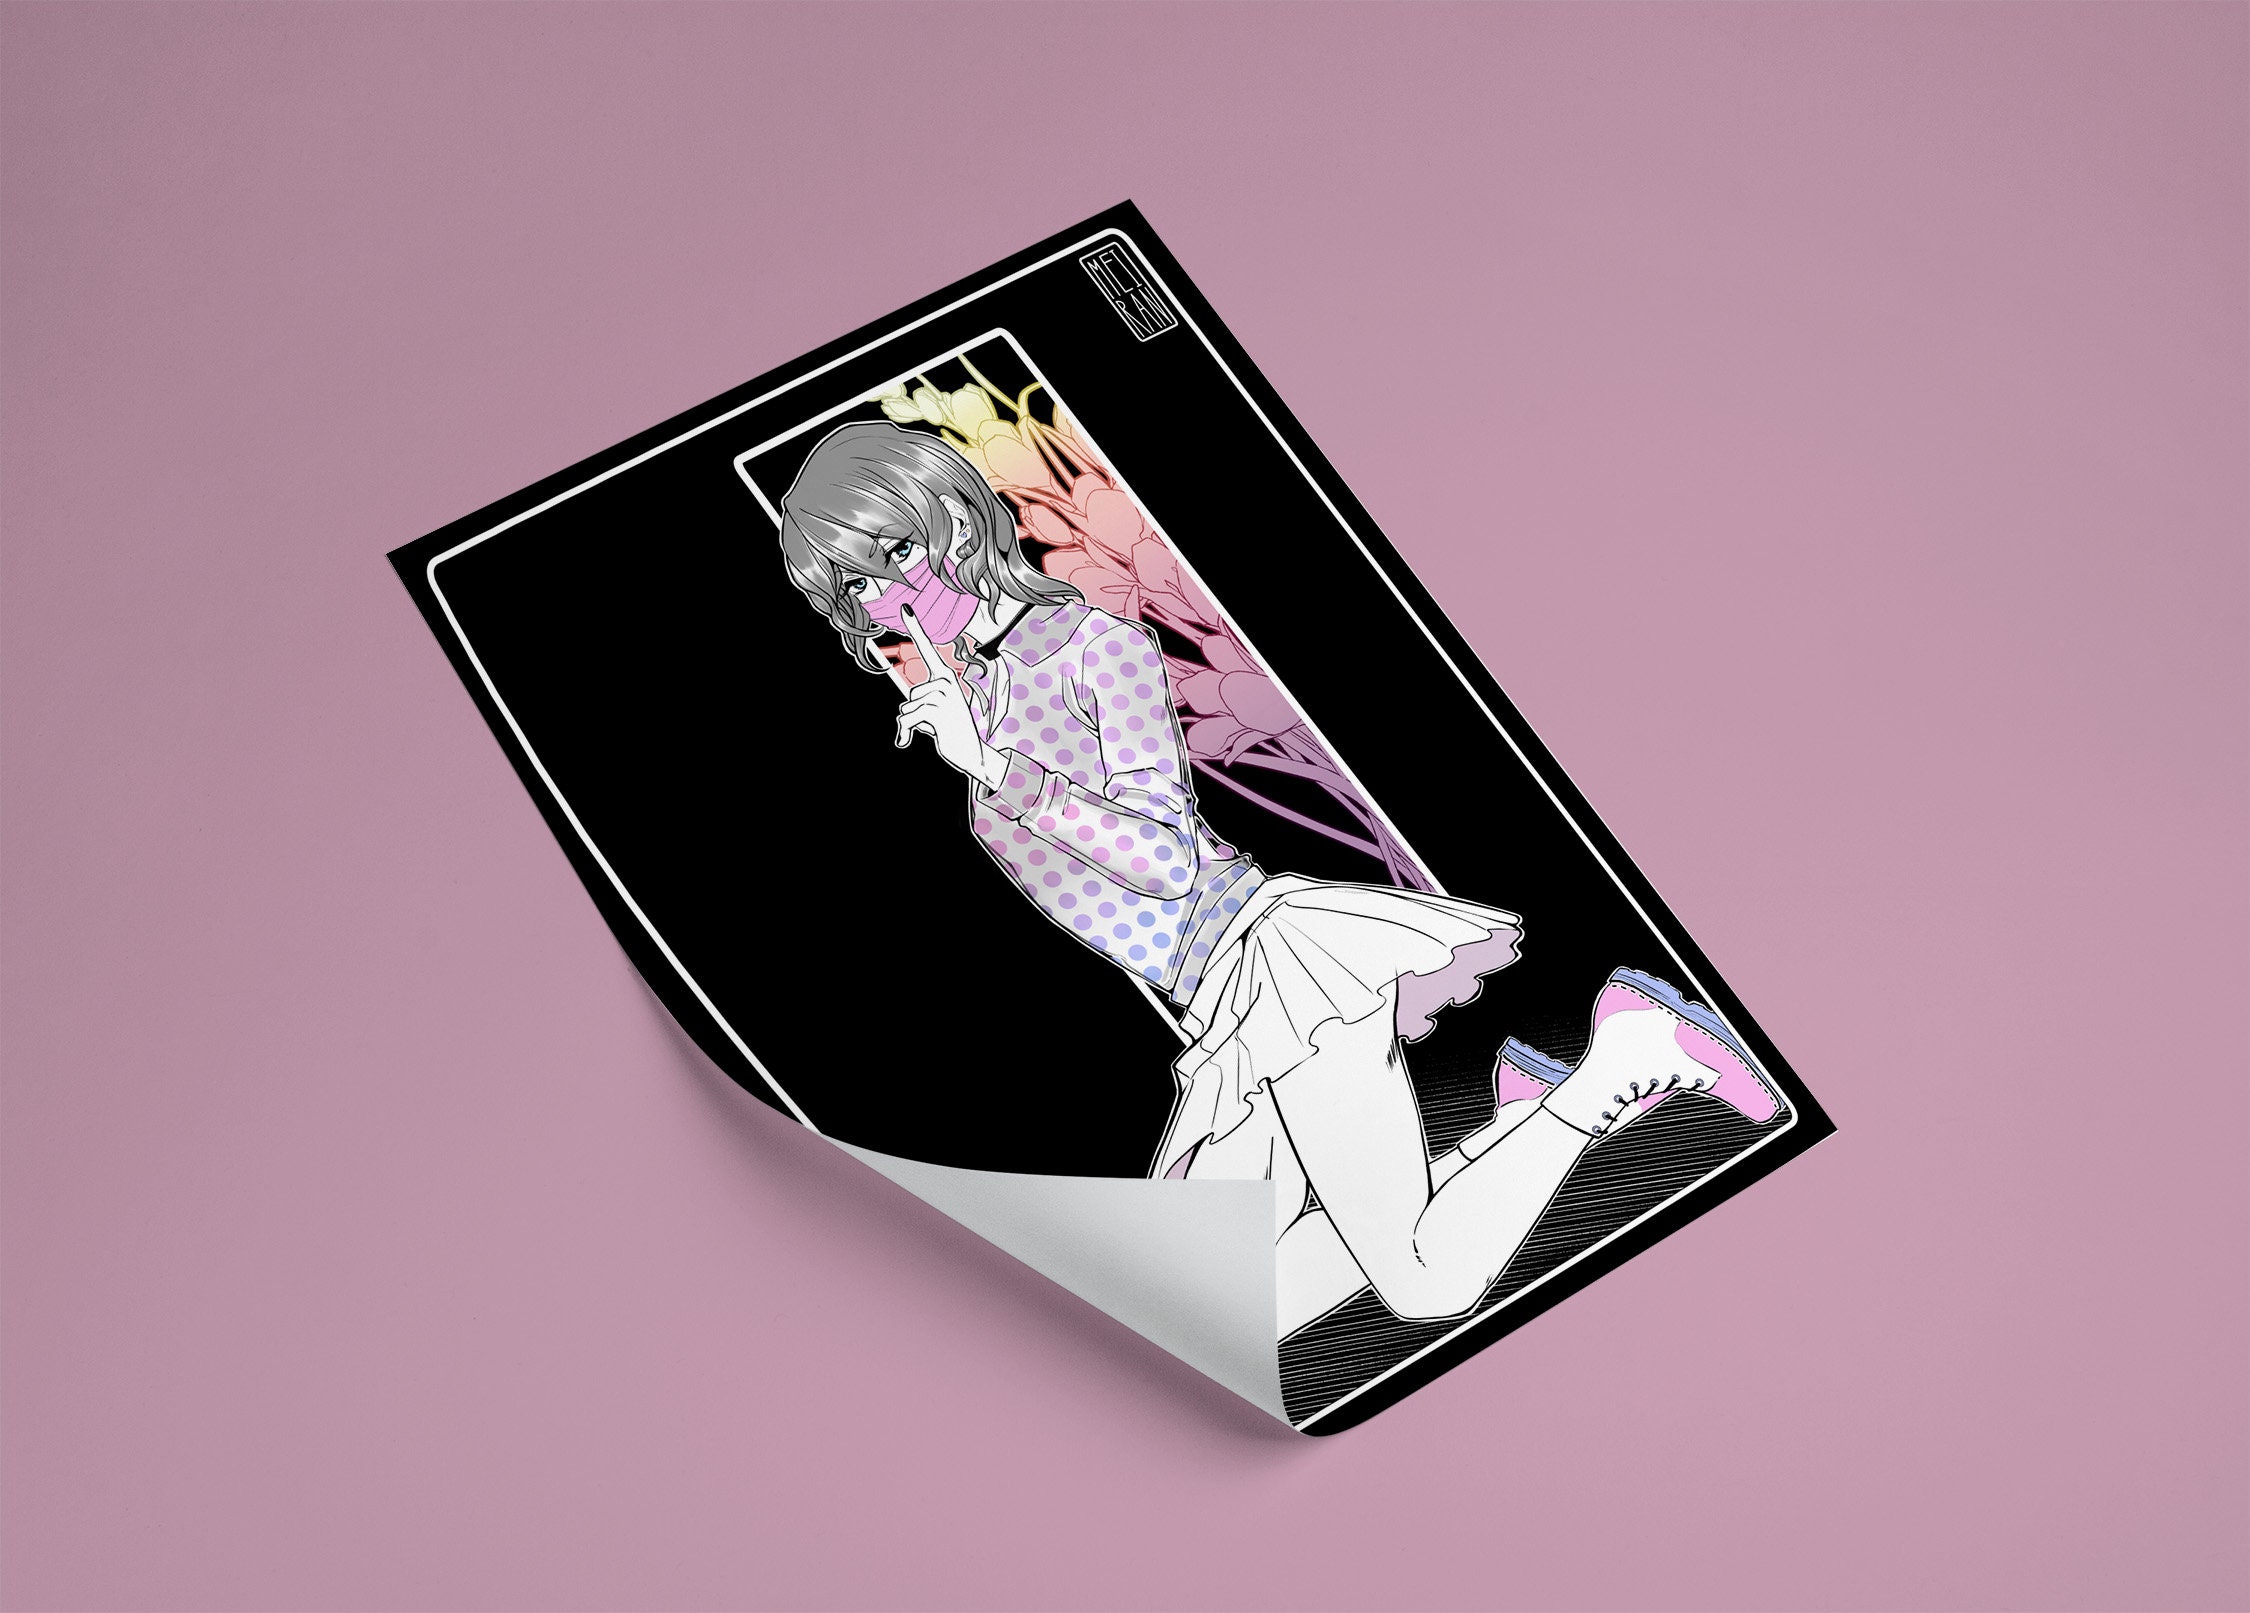 Naughty - Dark Anime Aesthetic Art Board Print for Sale by SEryST